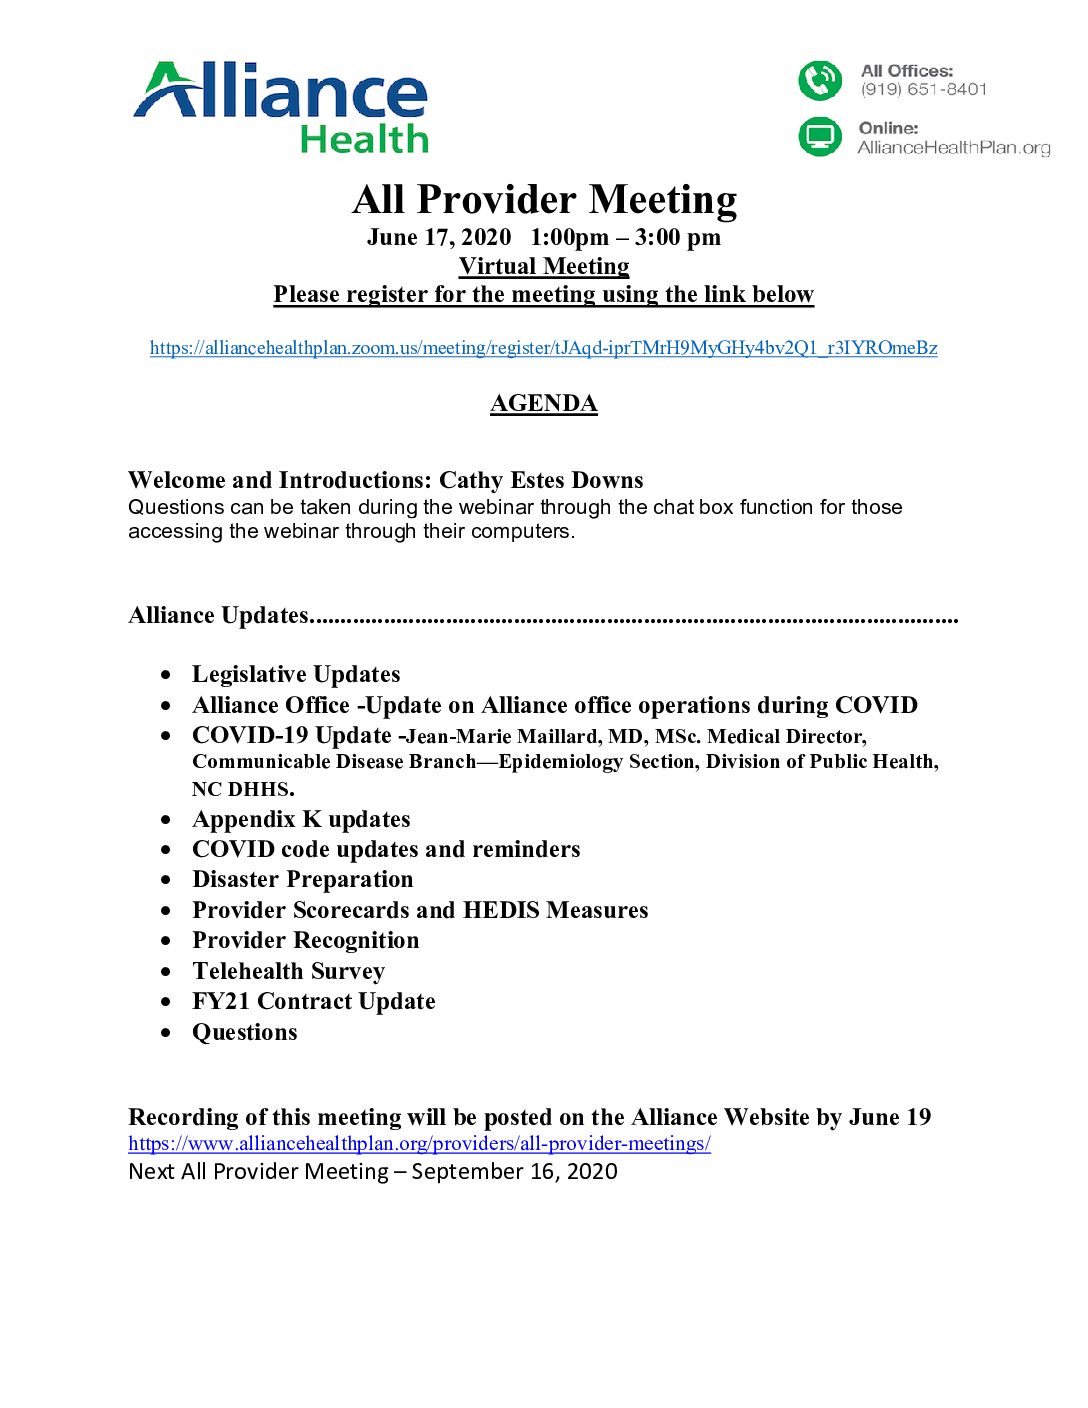 All Provider Meeting Agenda June 2020